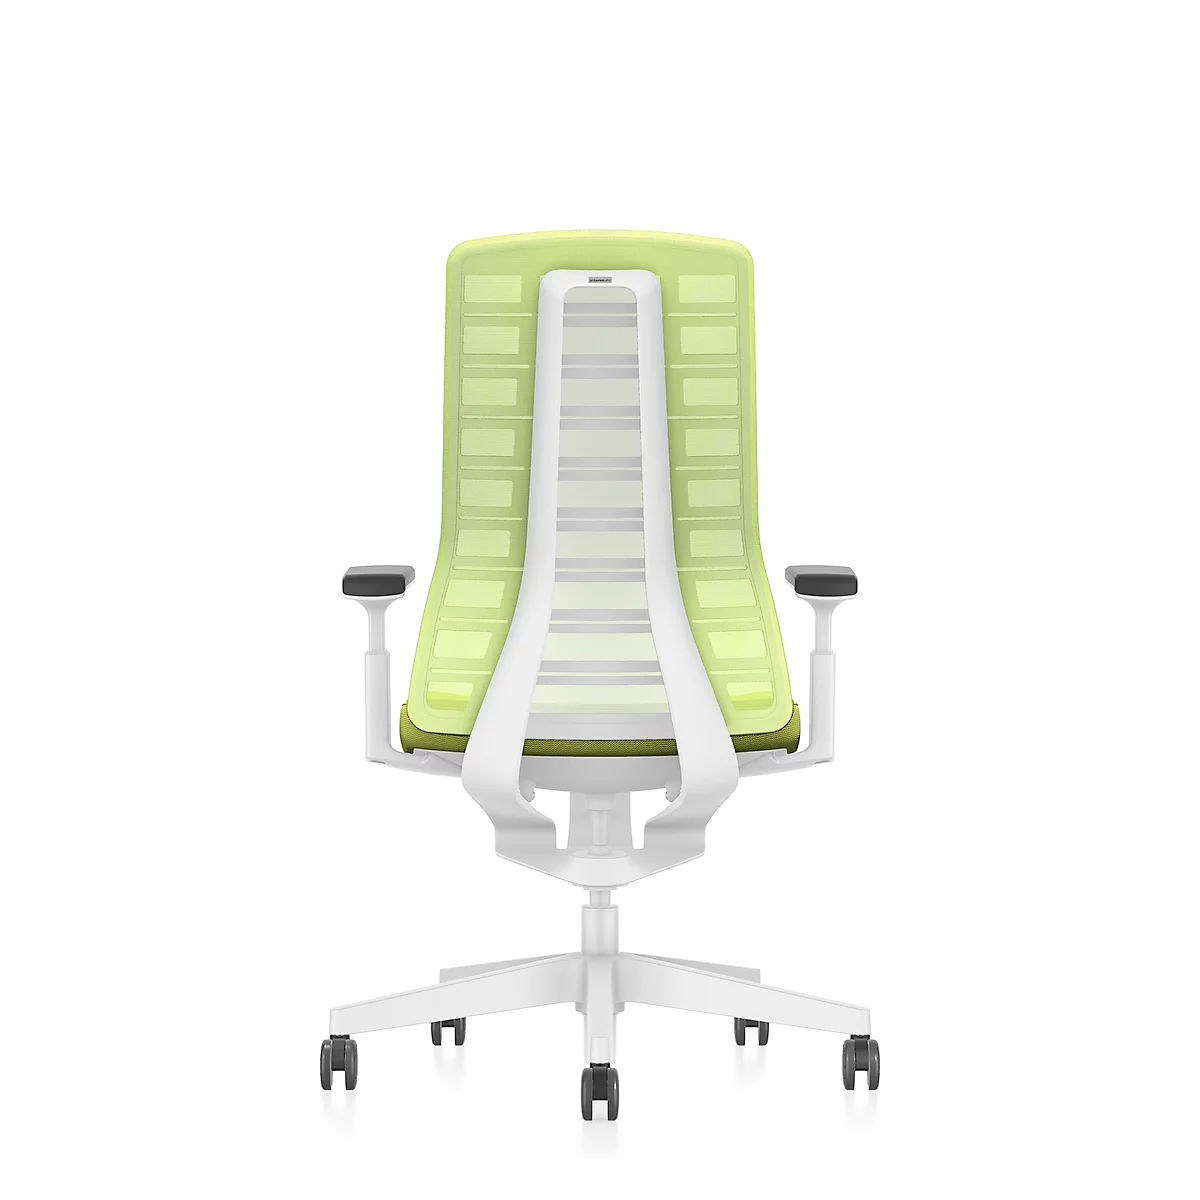 Interstuhl bureaustoel PUREis3, verstelbare armleuningen, 3D auto-synchroonmechanisme, kuipzitting, gazen rugleuning, meigroen/wit